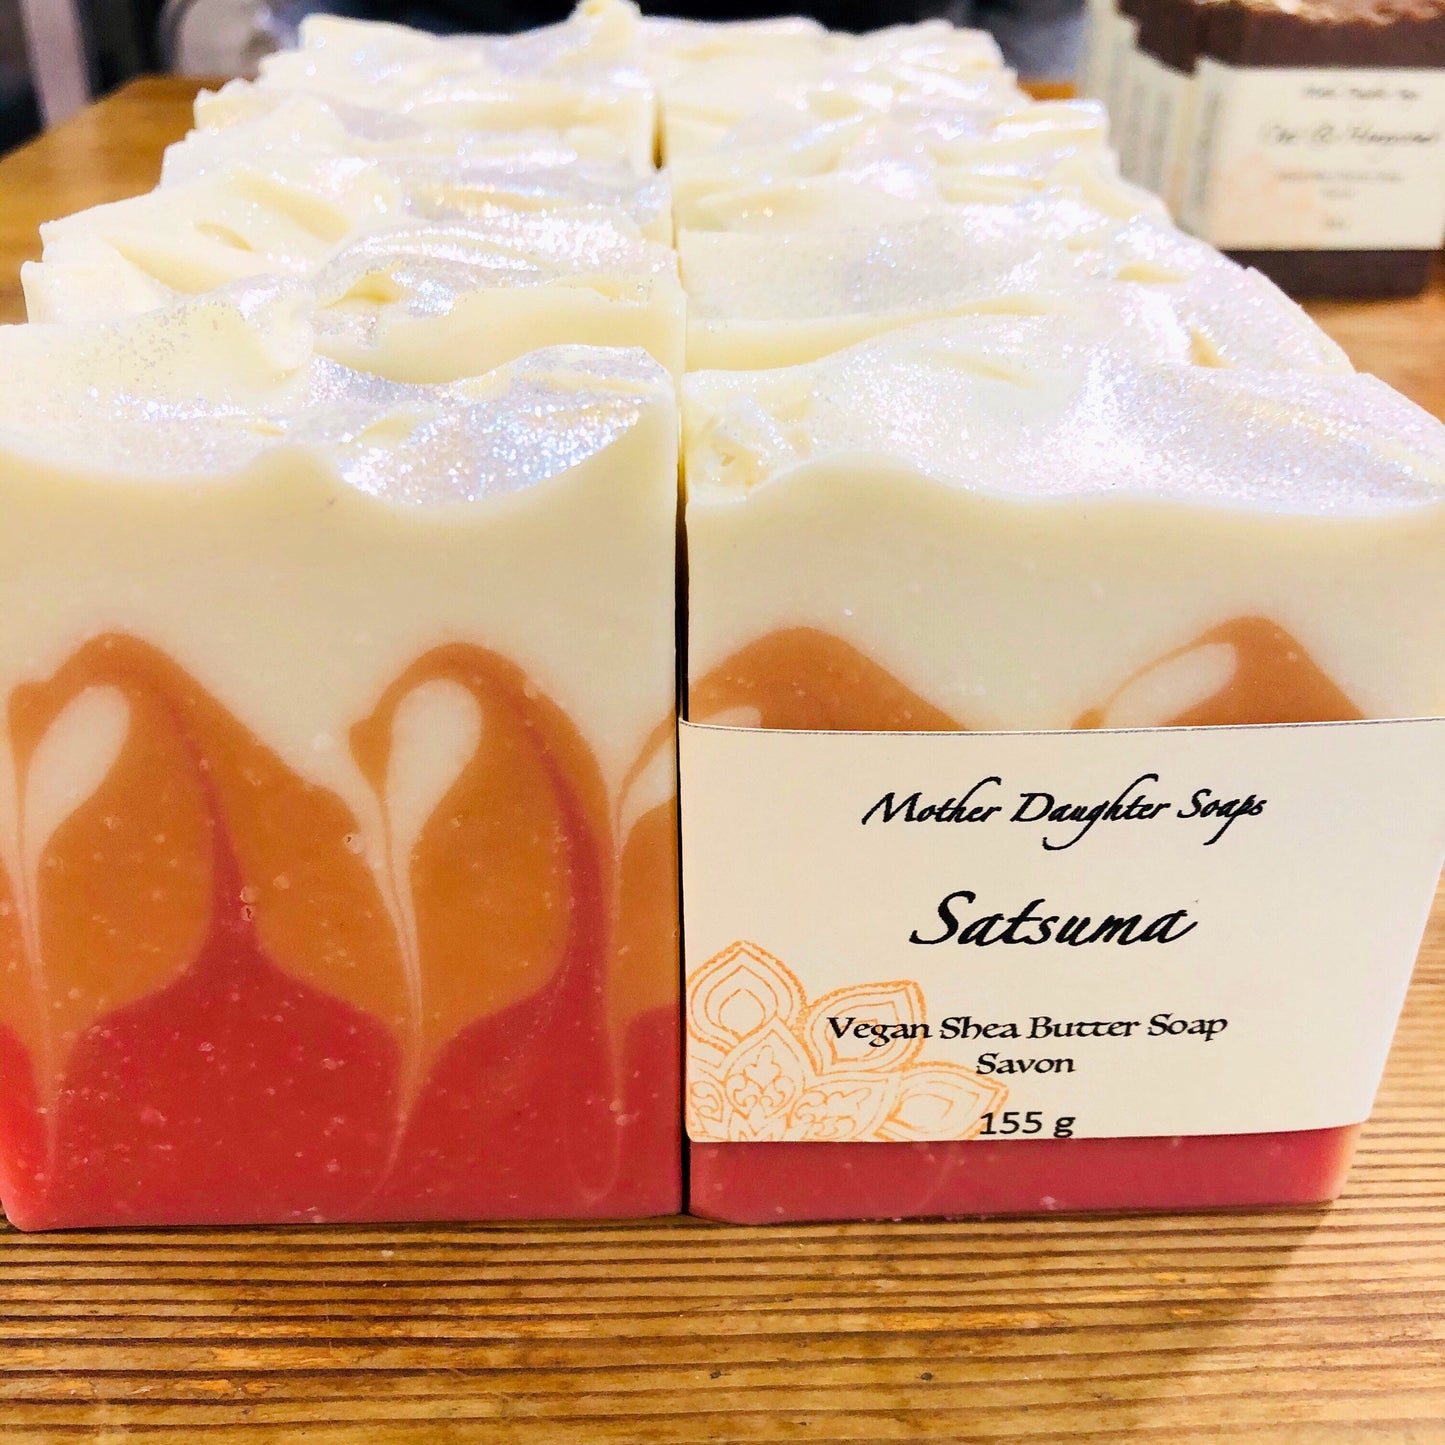 Satsuma/Artisan Soap/Vegan/Shea Butter/Biodegradable/Cruelty-Free/Eco-friendly Mica Glitter/Cold Process Soap/Handmade on Vancouver Island